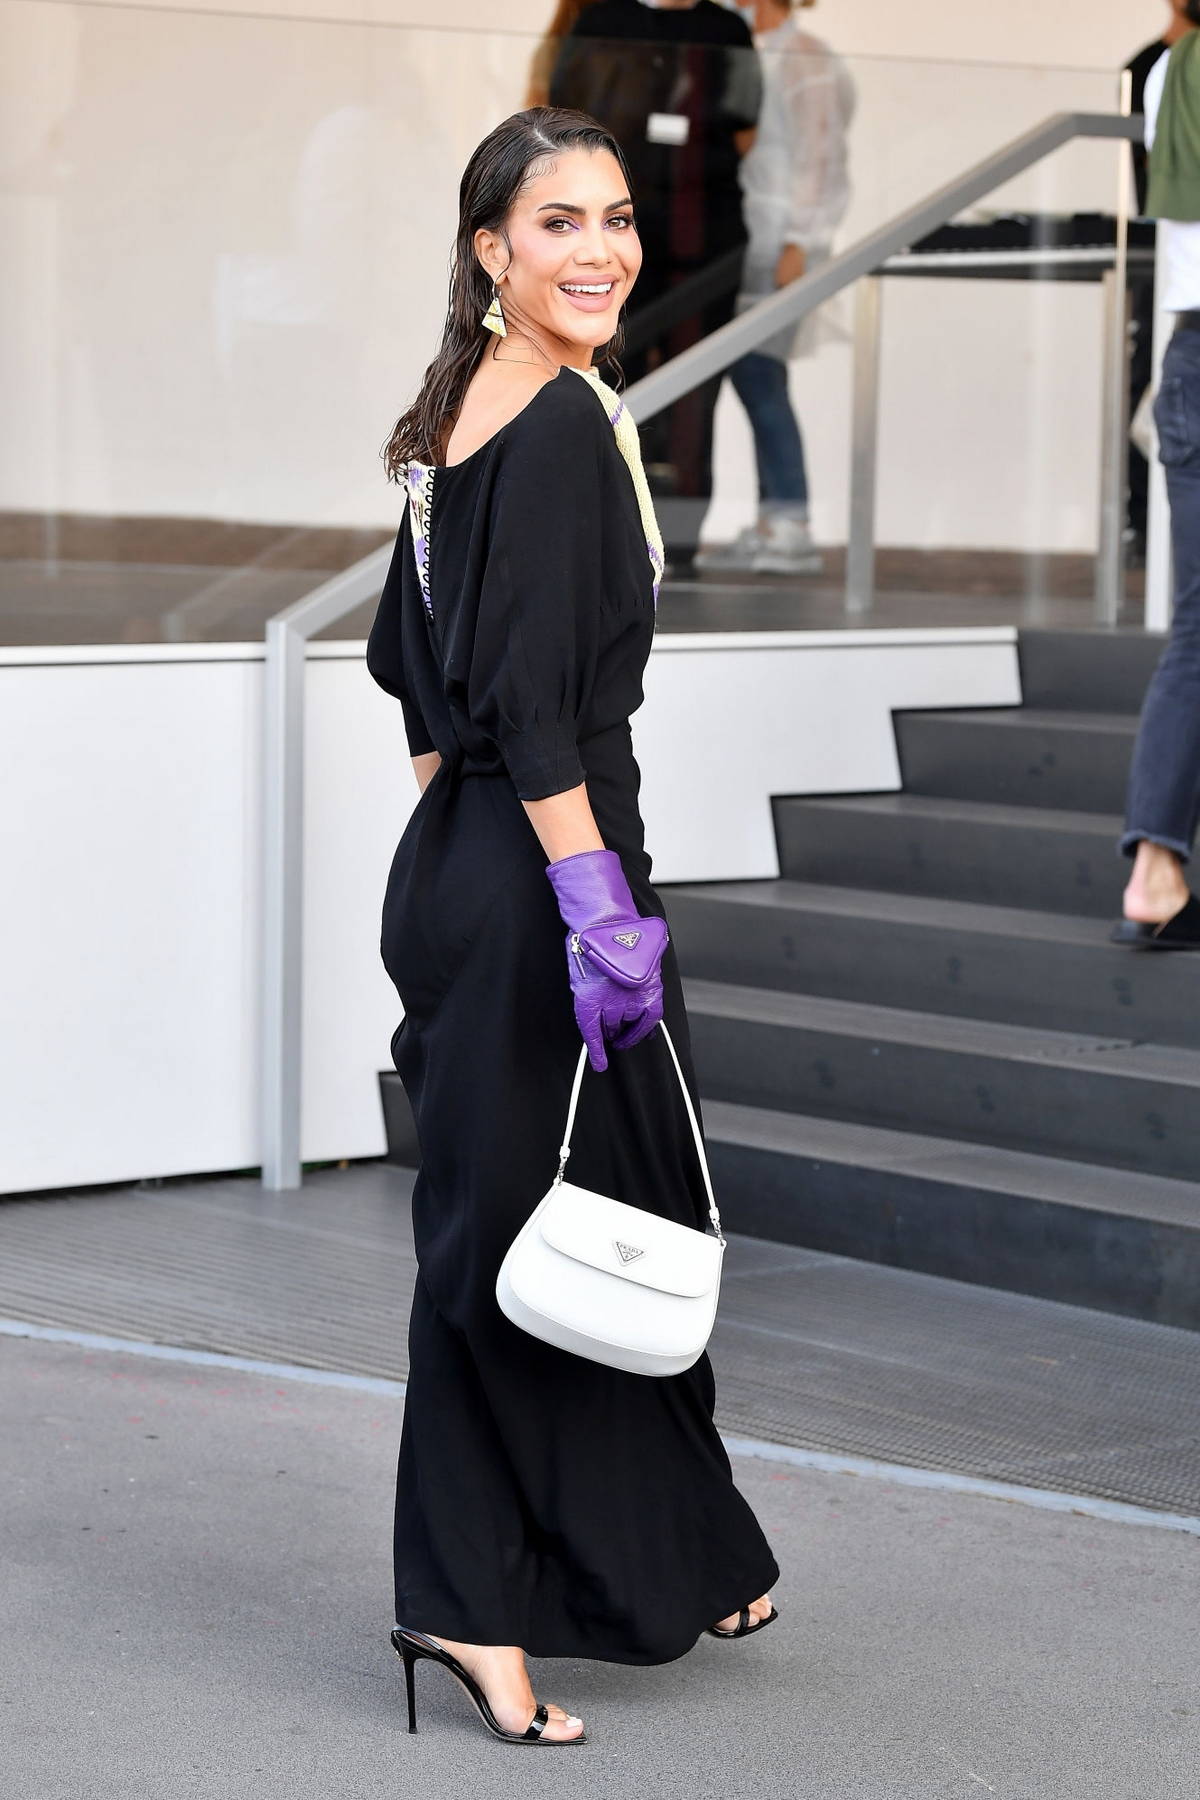 Camila Coelho attending the show during Milan Fashion Week